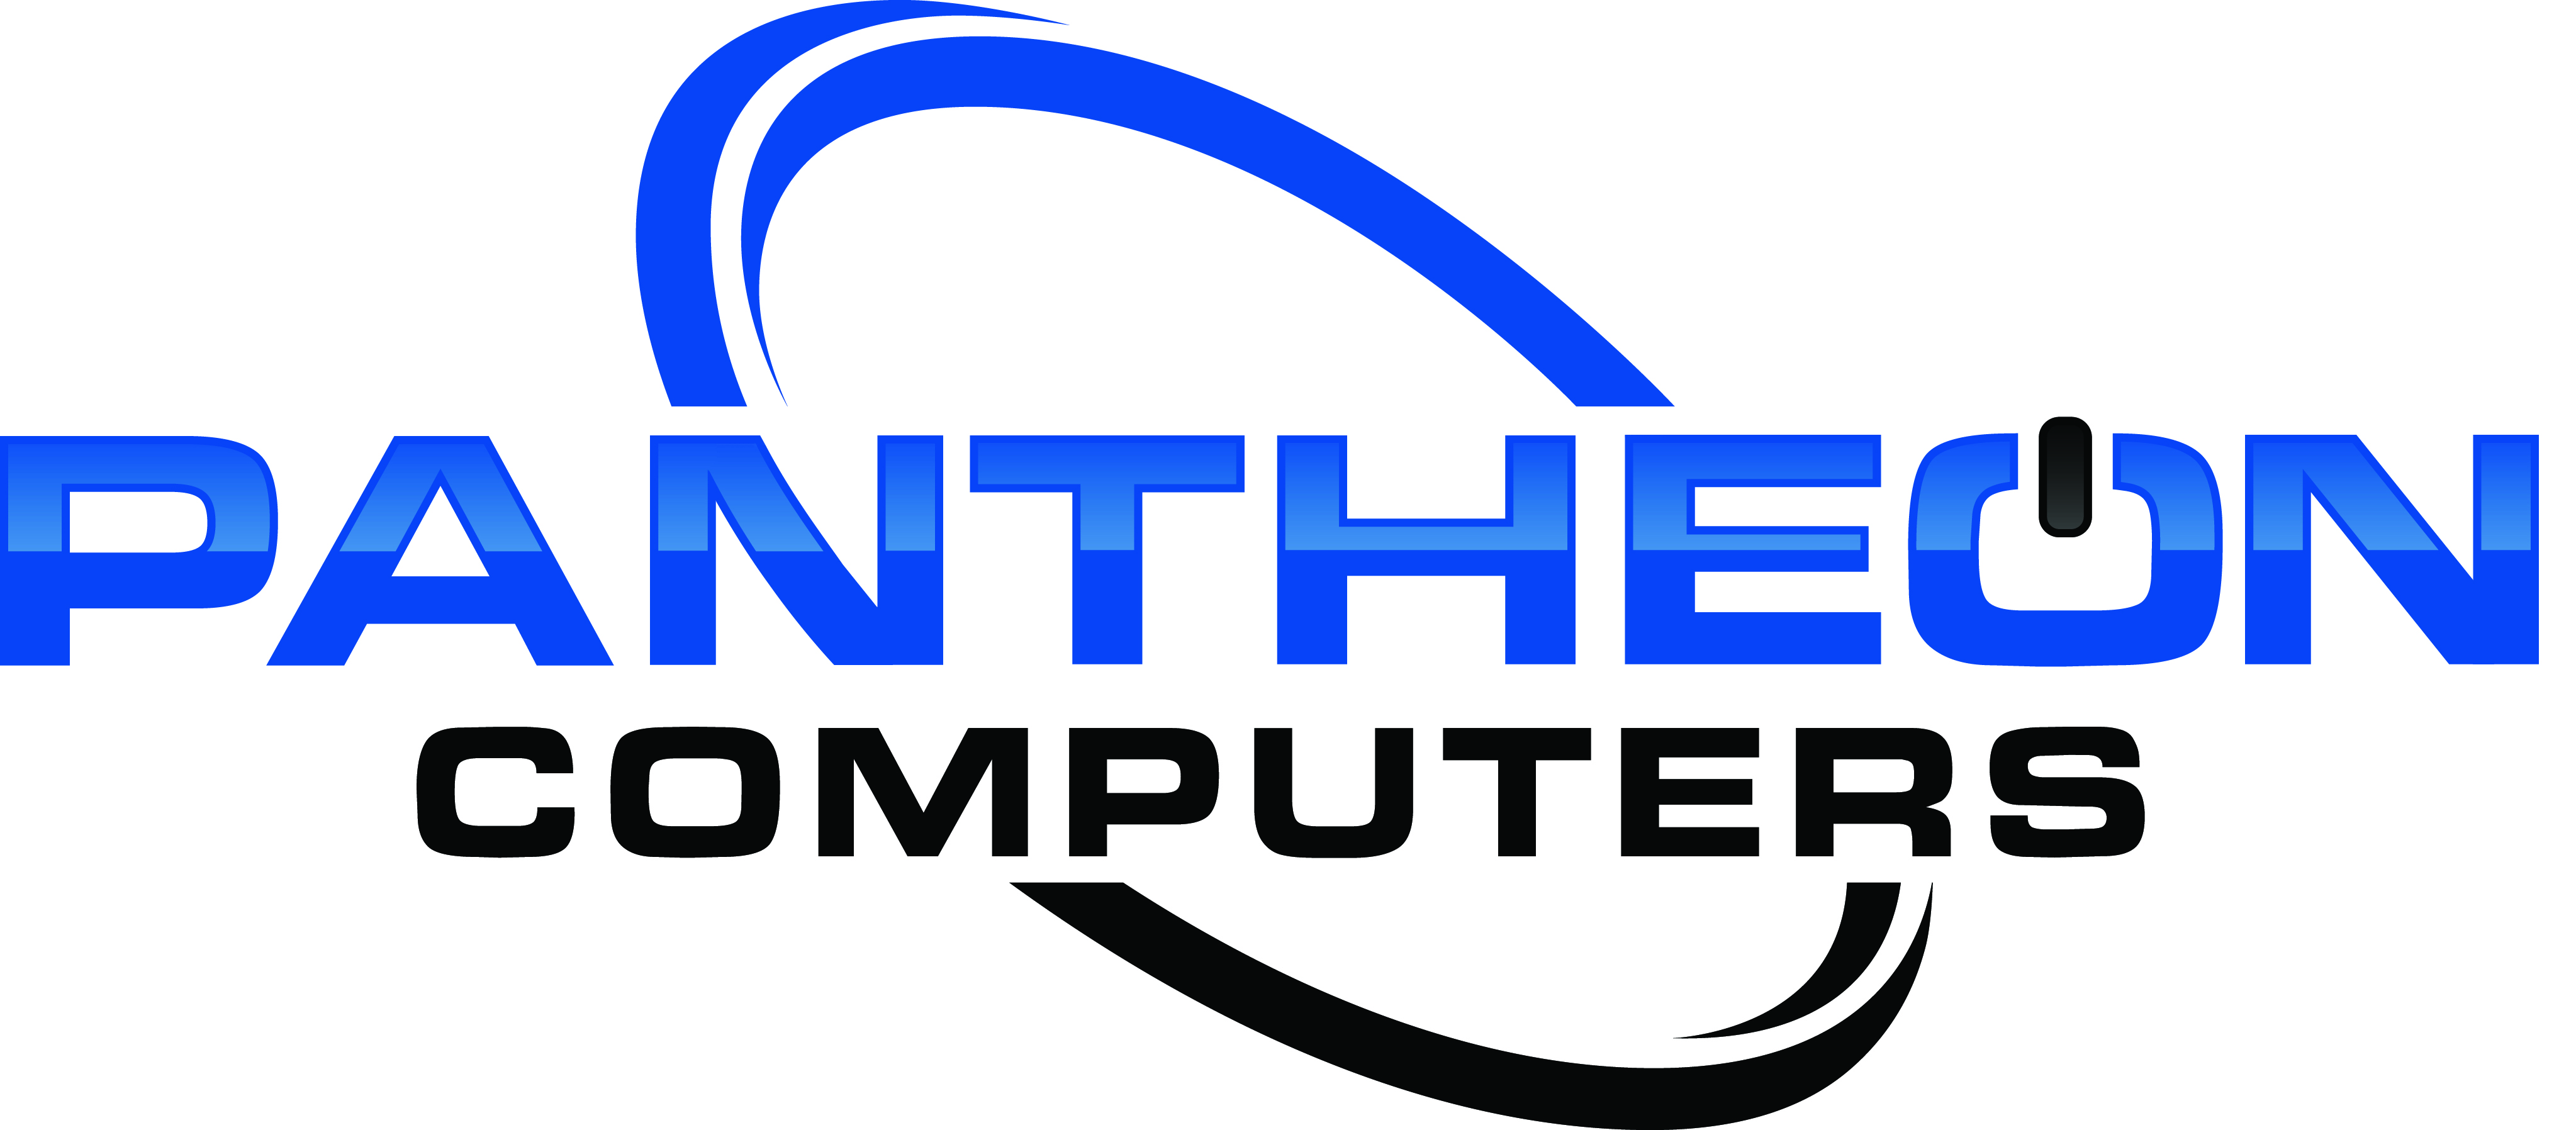 Pantheon Computers - Waseca